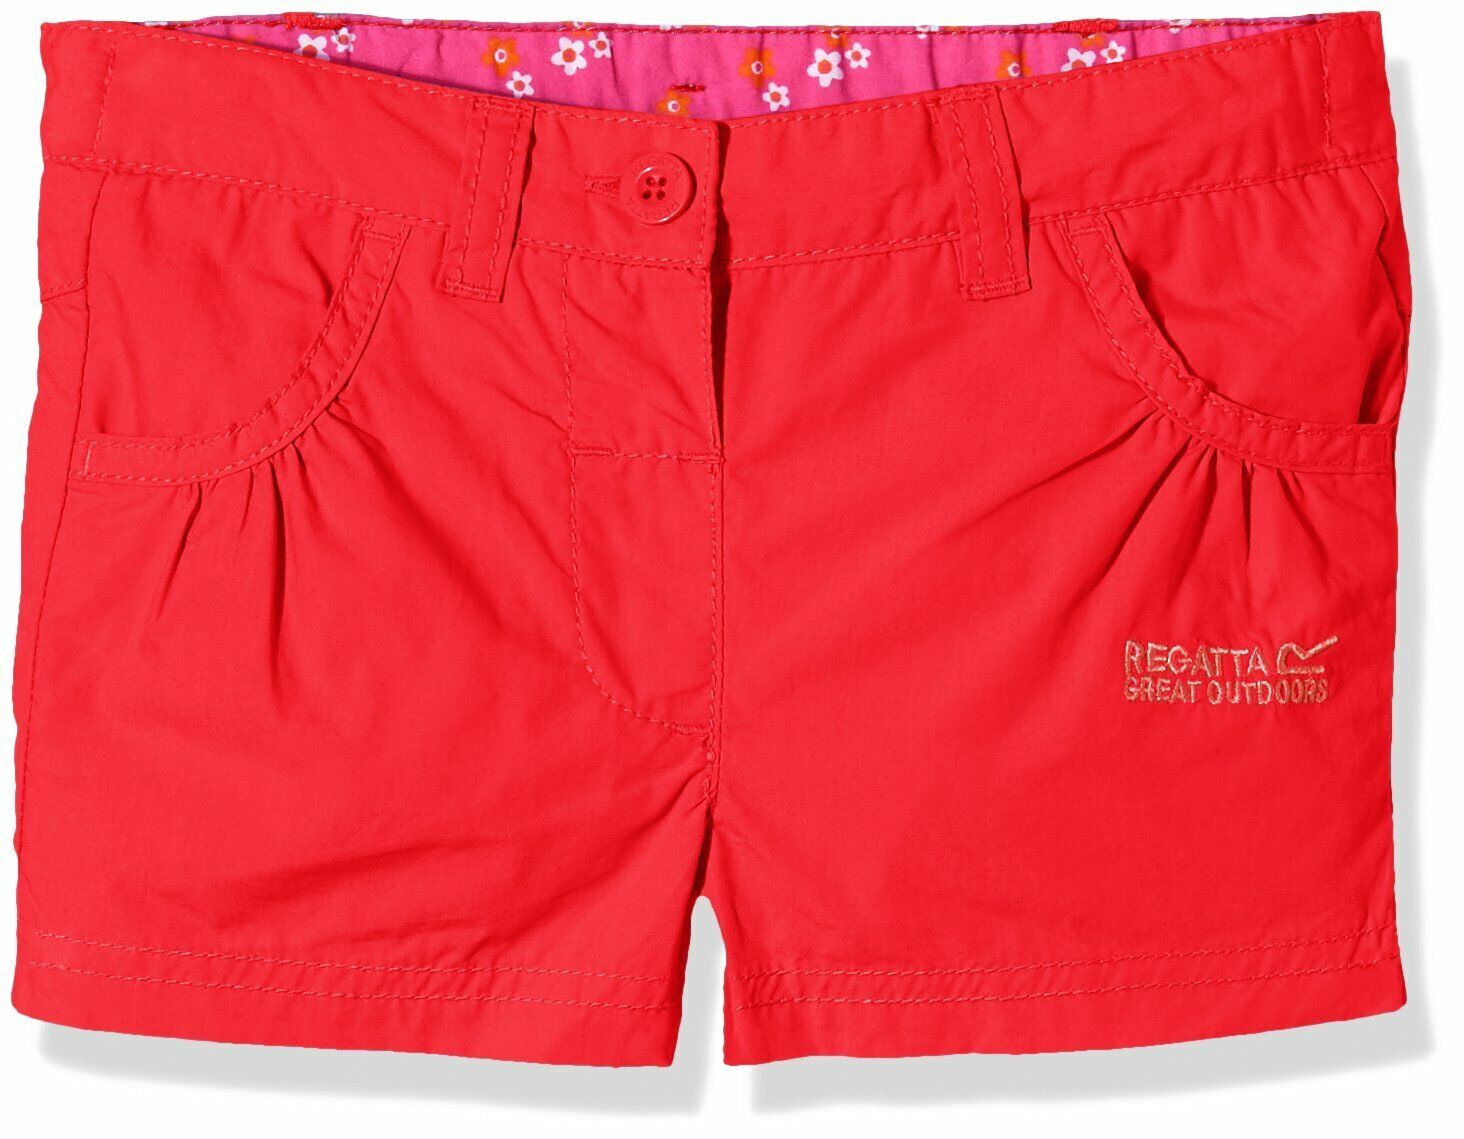 Regatta Girls Children's Shorts, Coral Blush, 176